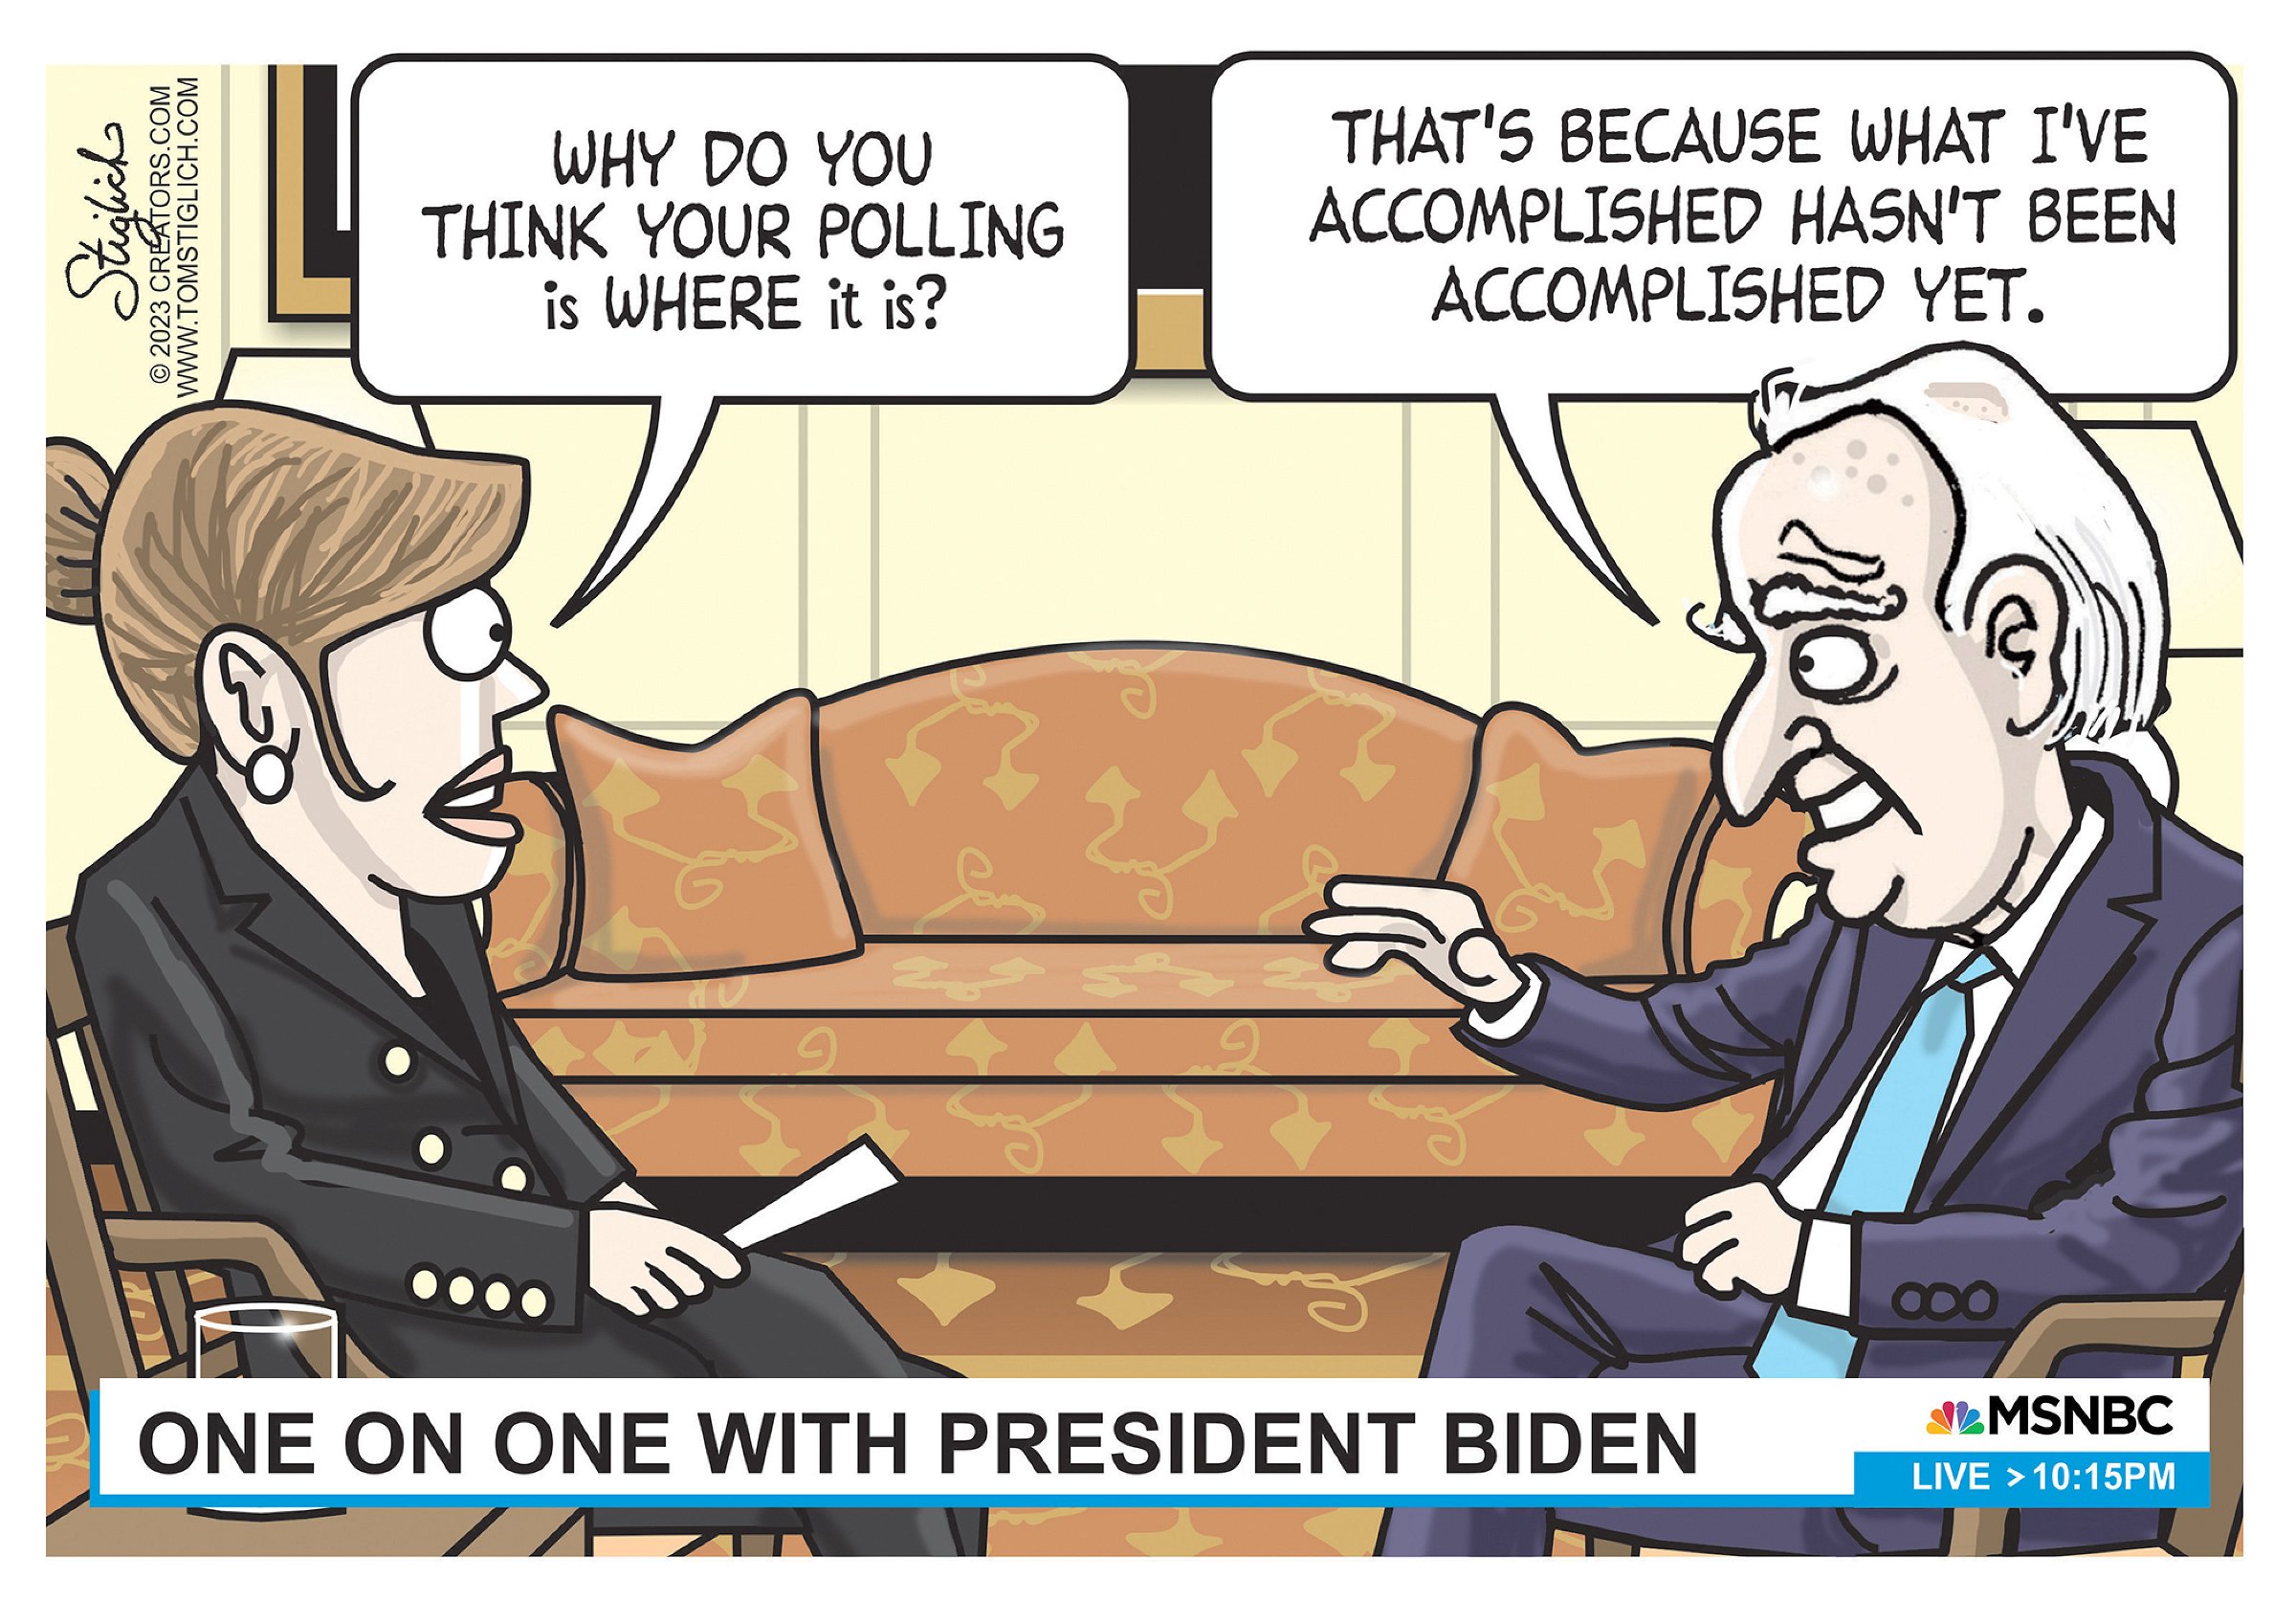 Biden accomplishments